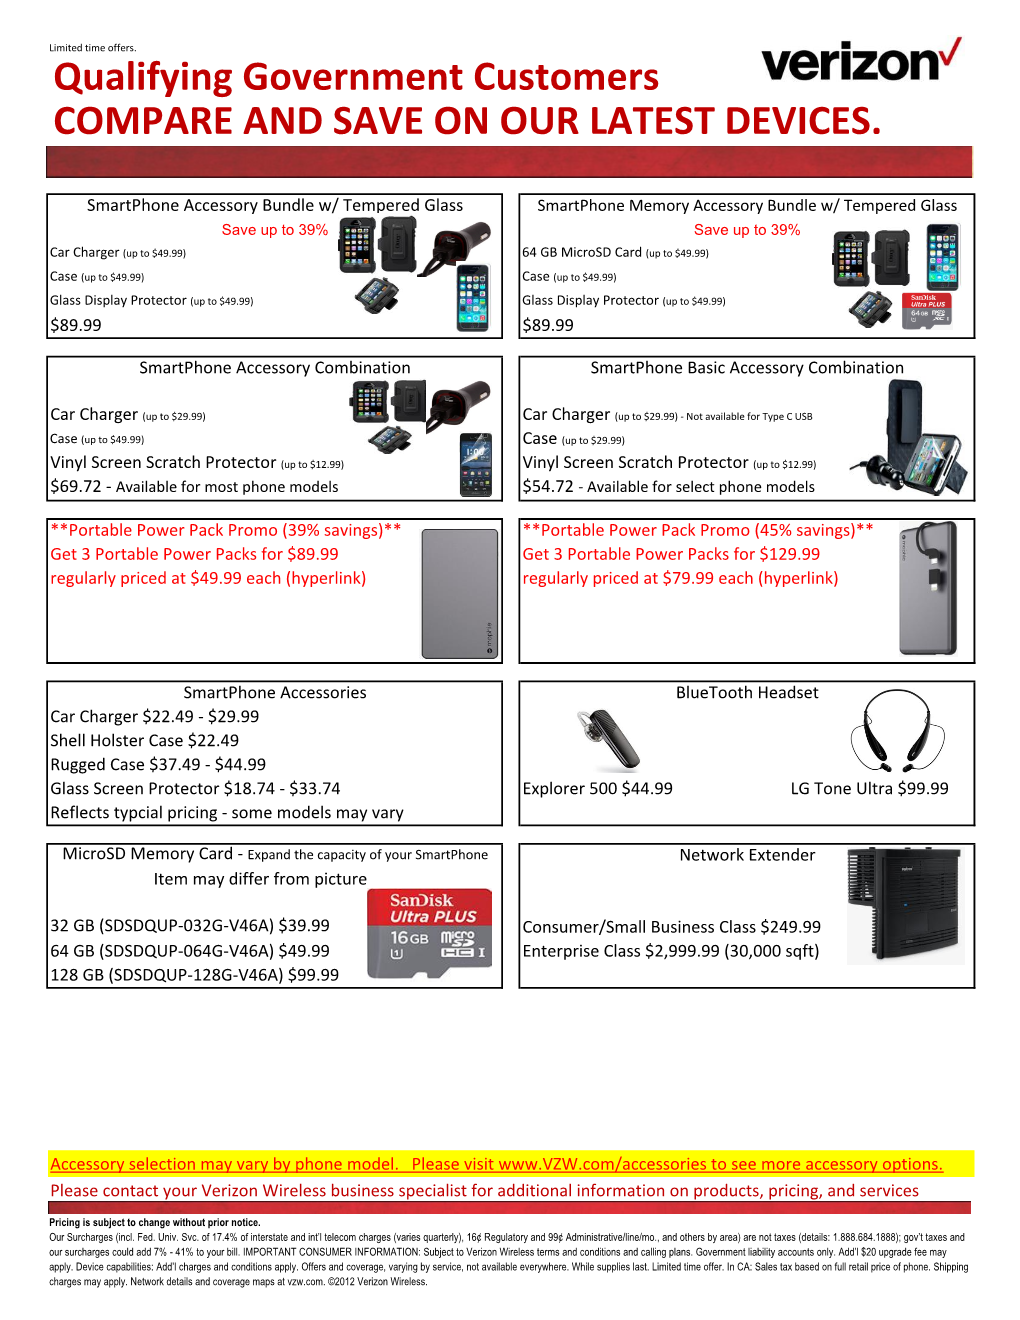 Current Verizon Equipment Offers (Pdf)